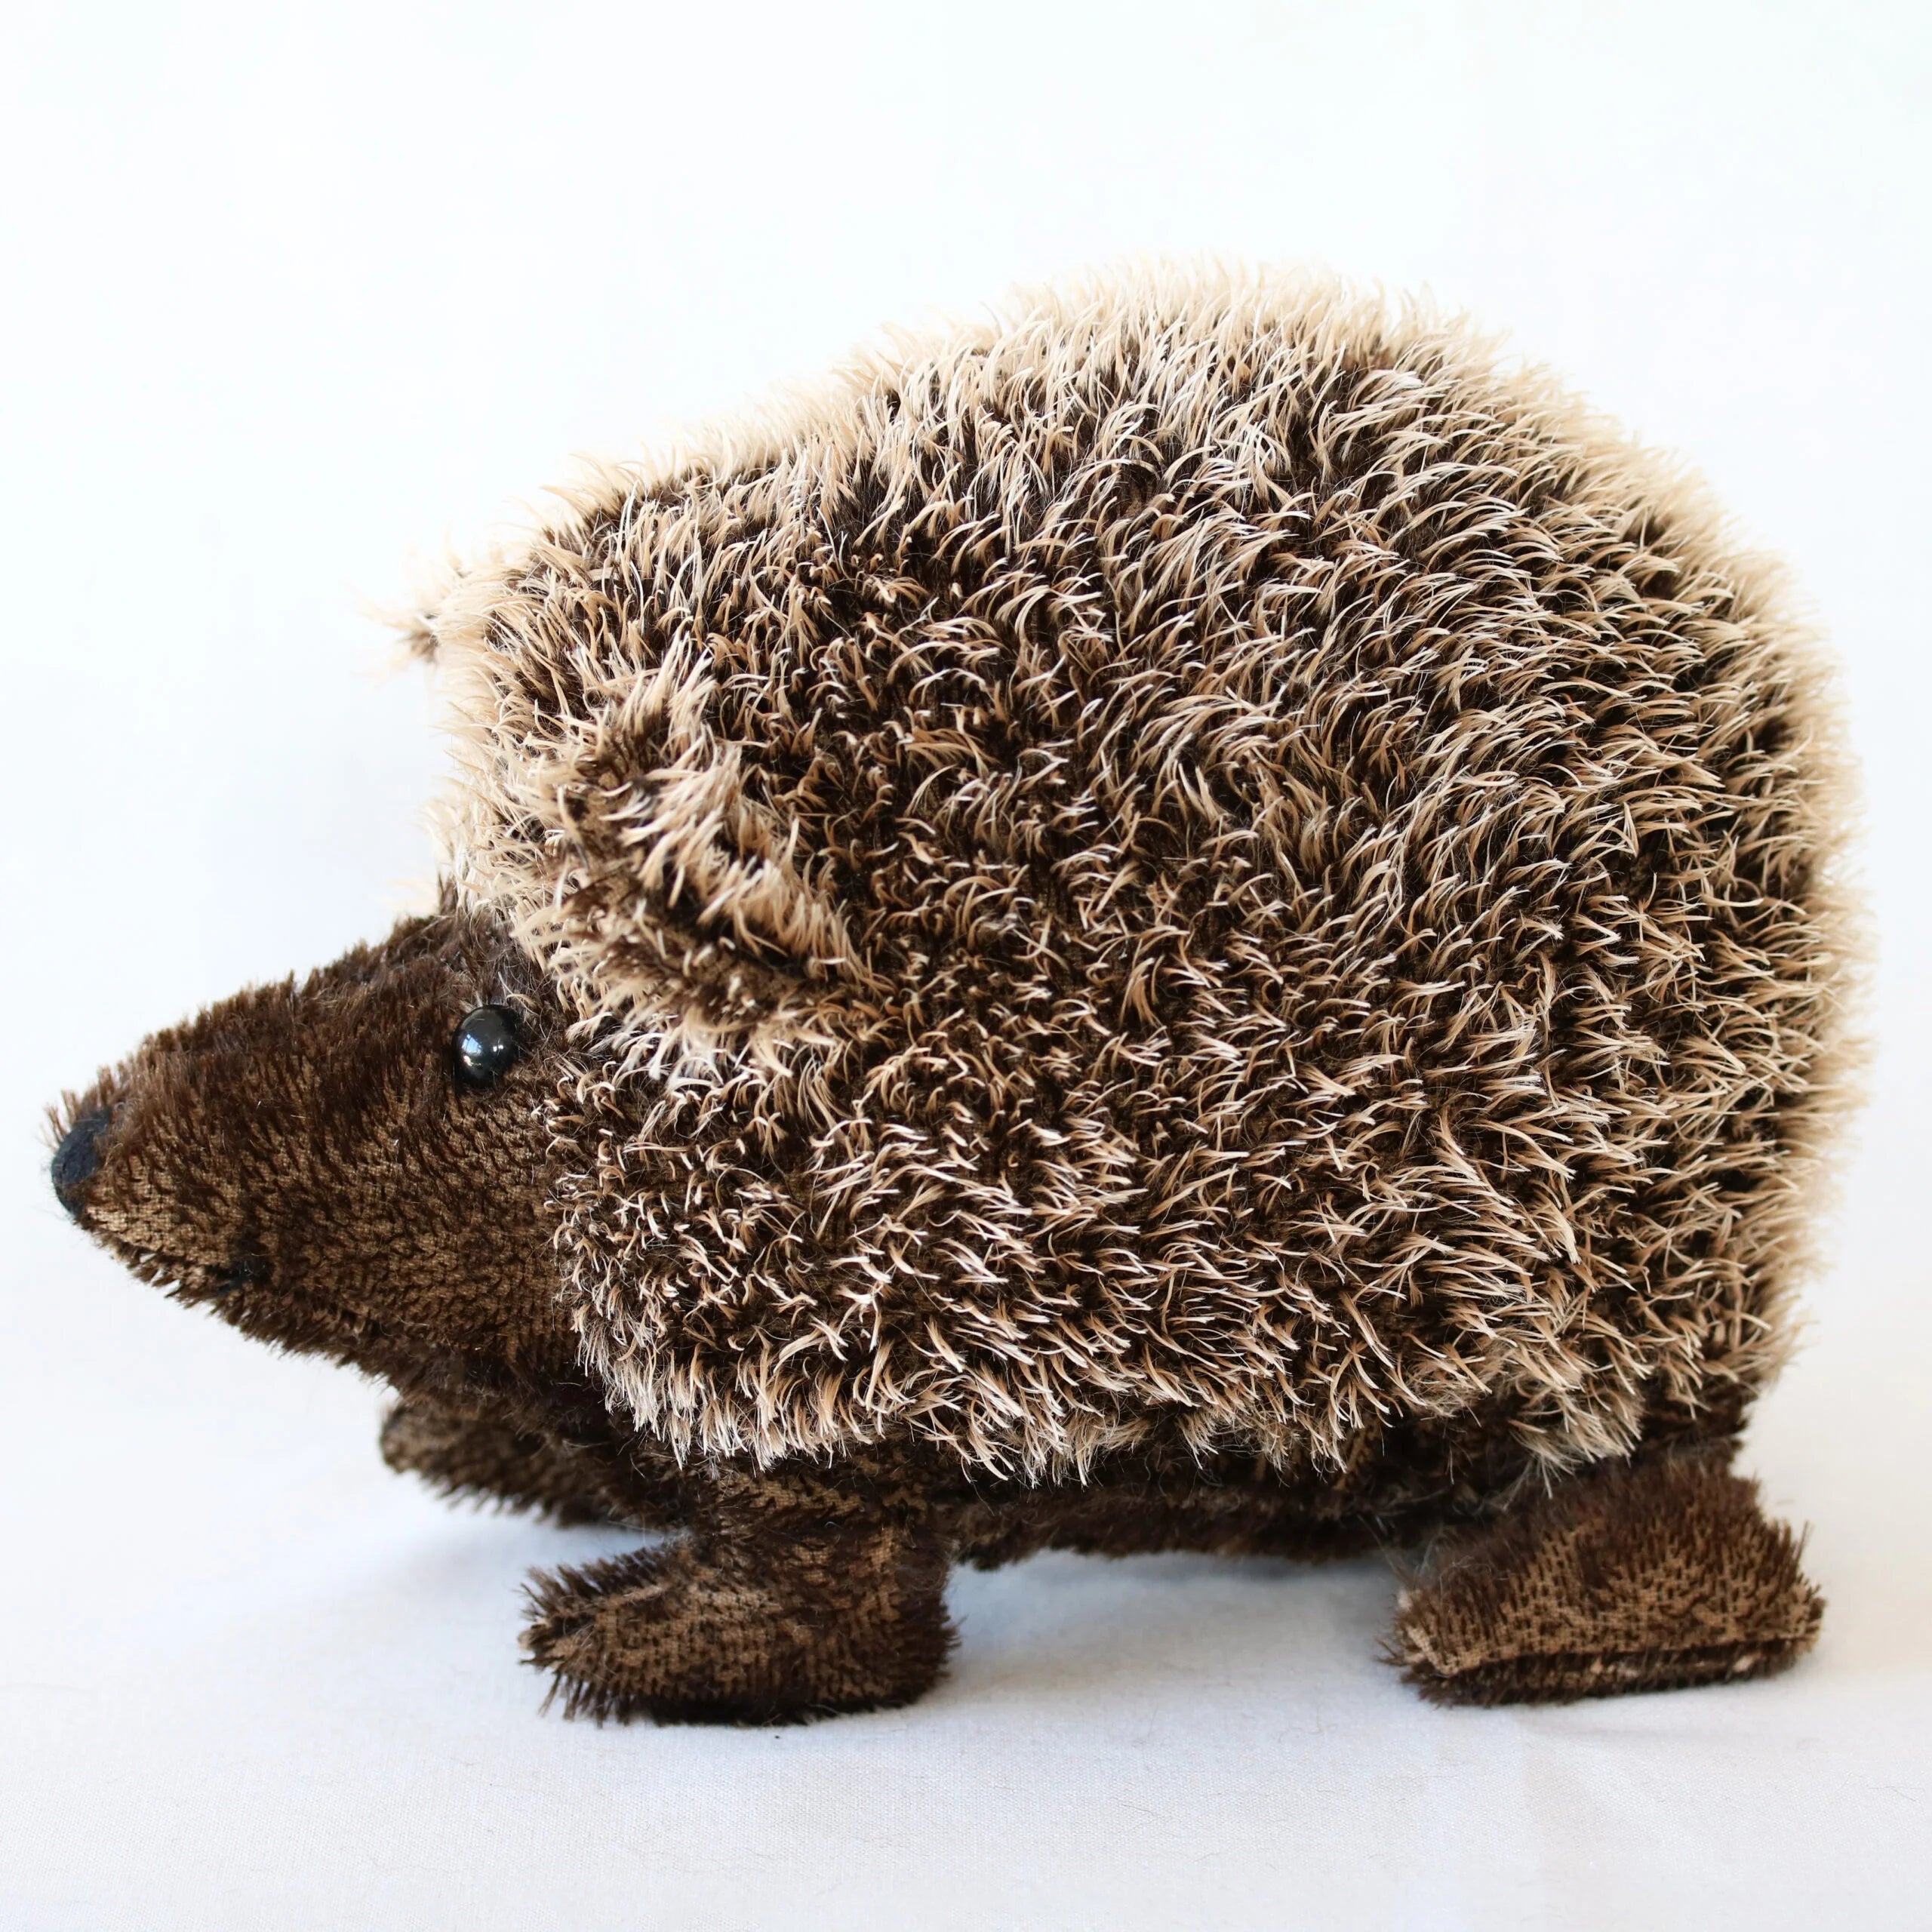 Horris The Handmade Hedgehog from Canterbury Bears.